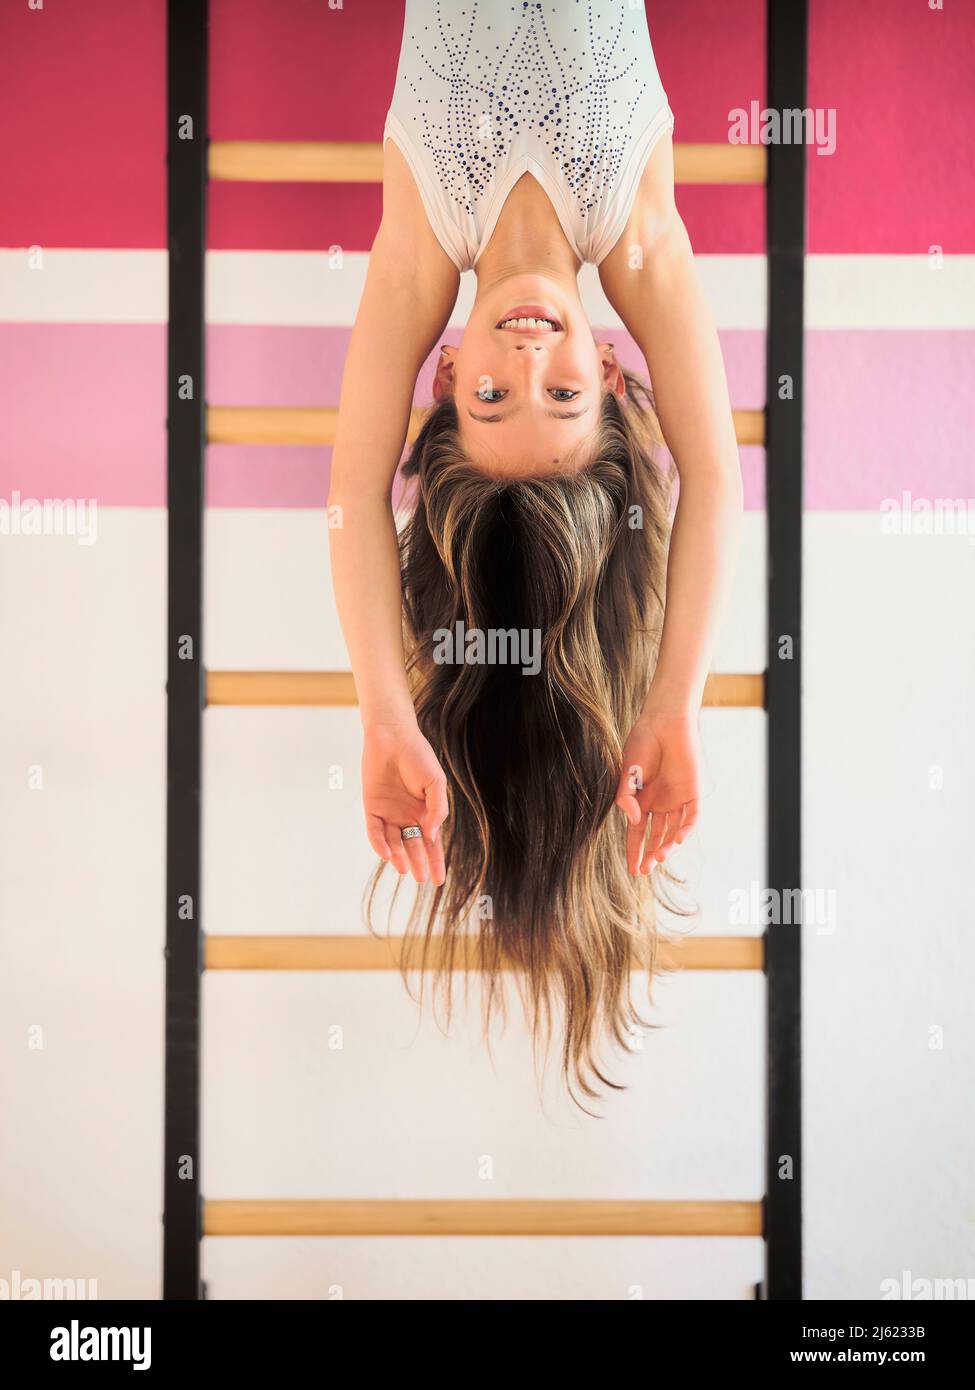 Smiling girl hanging upside down on wall bars Stock Photo